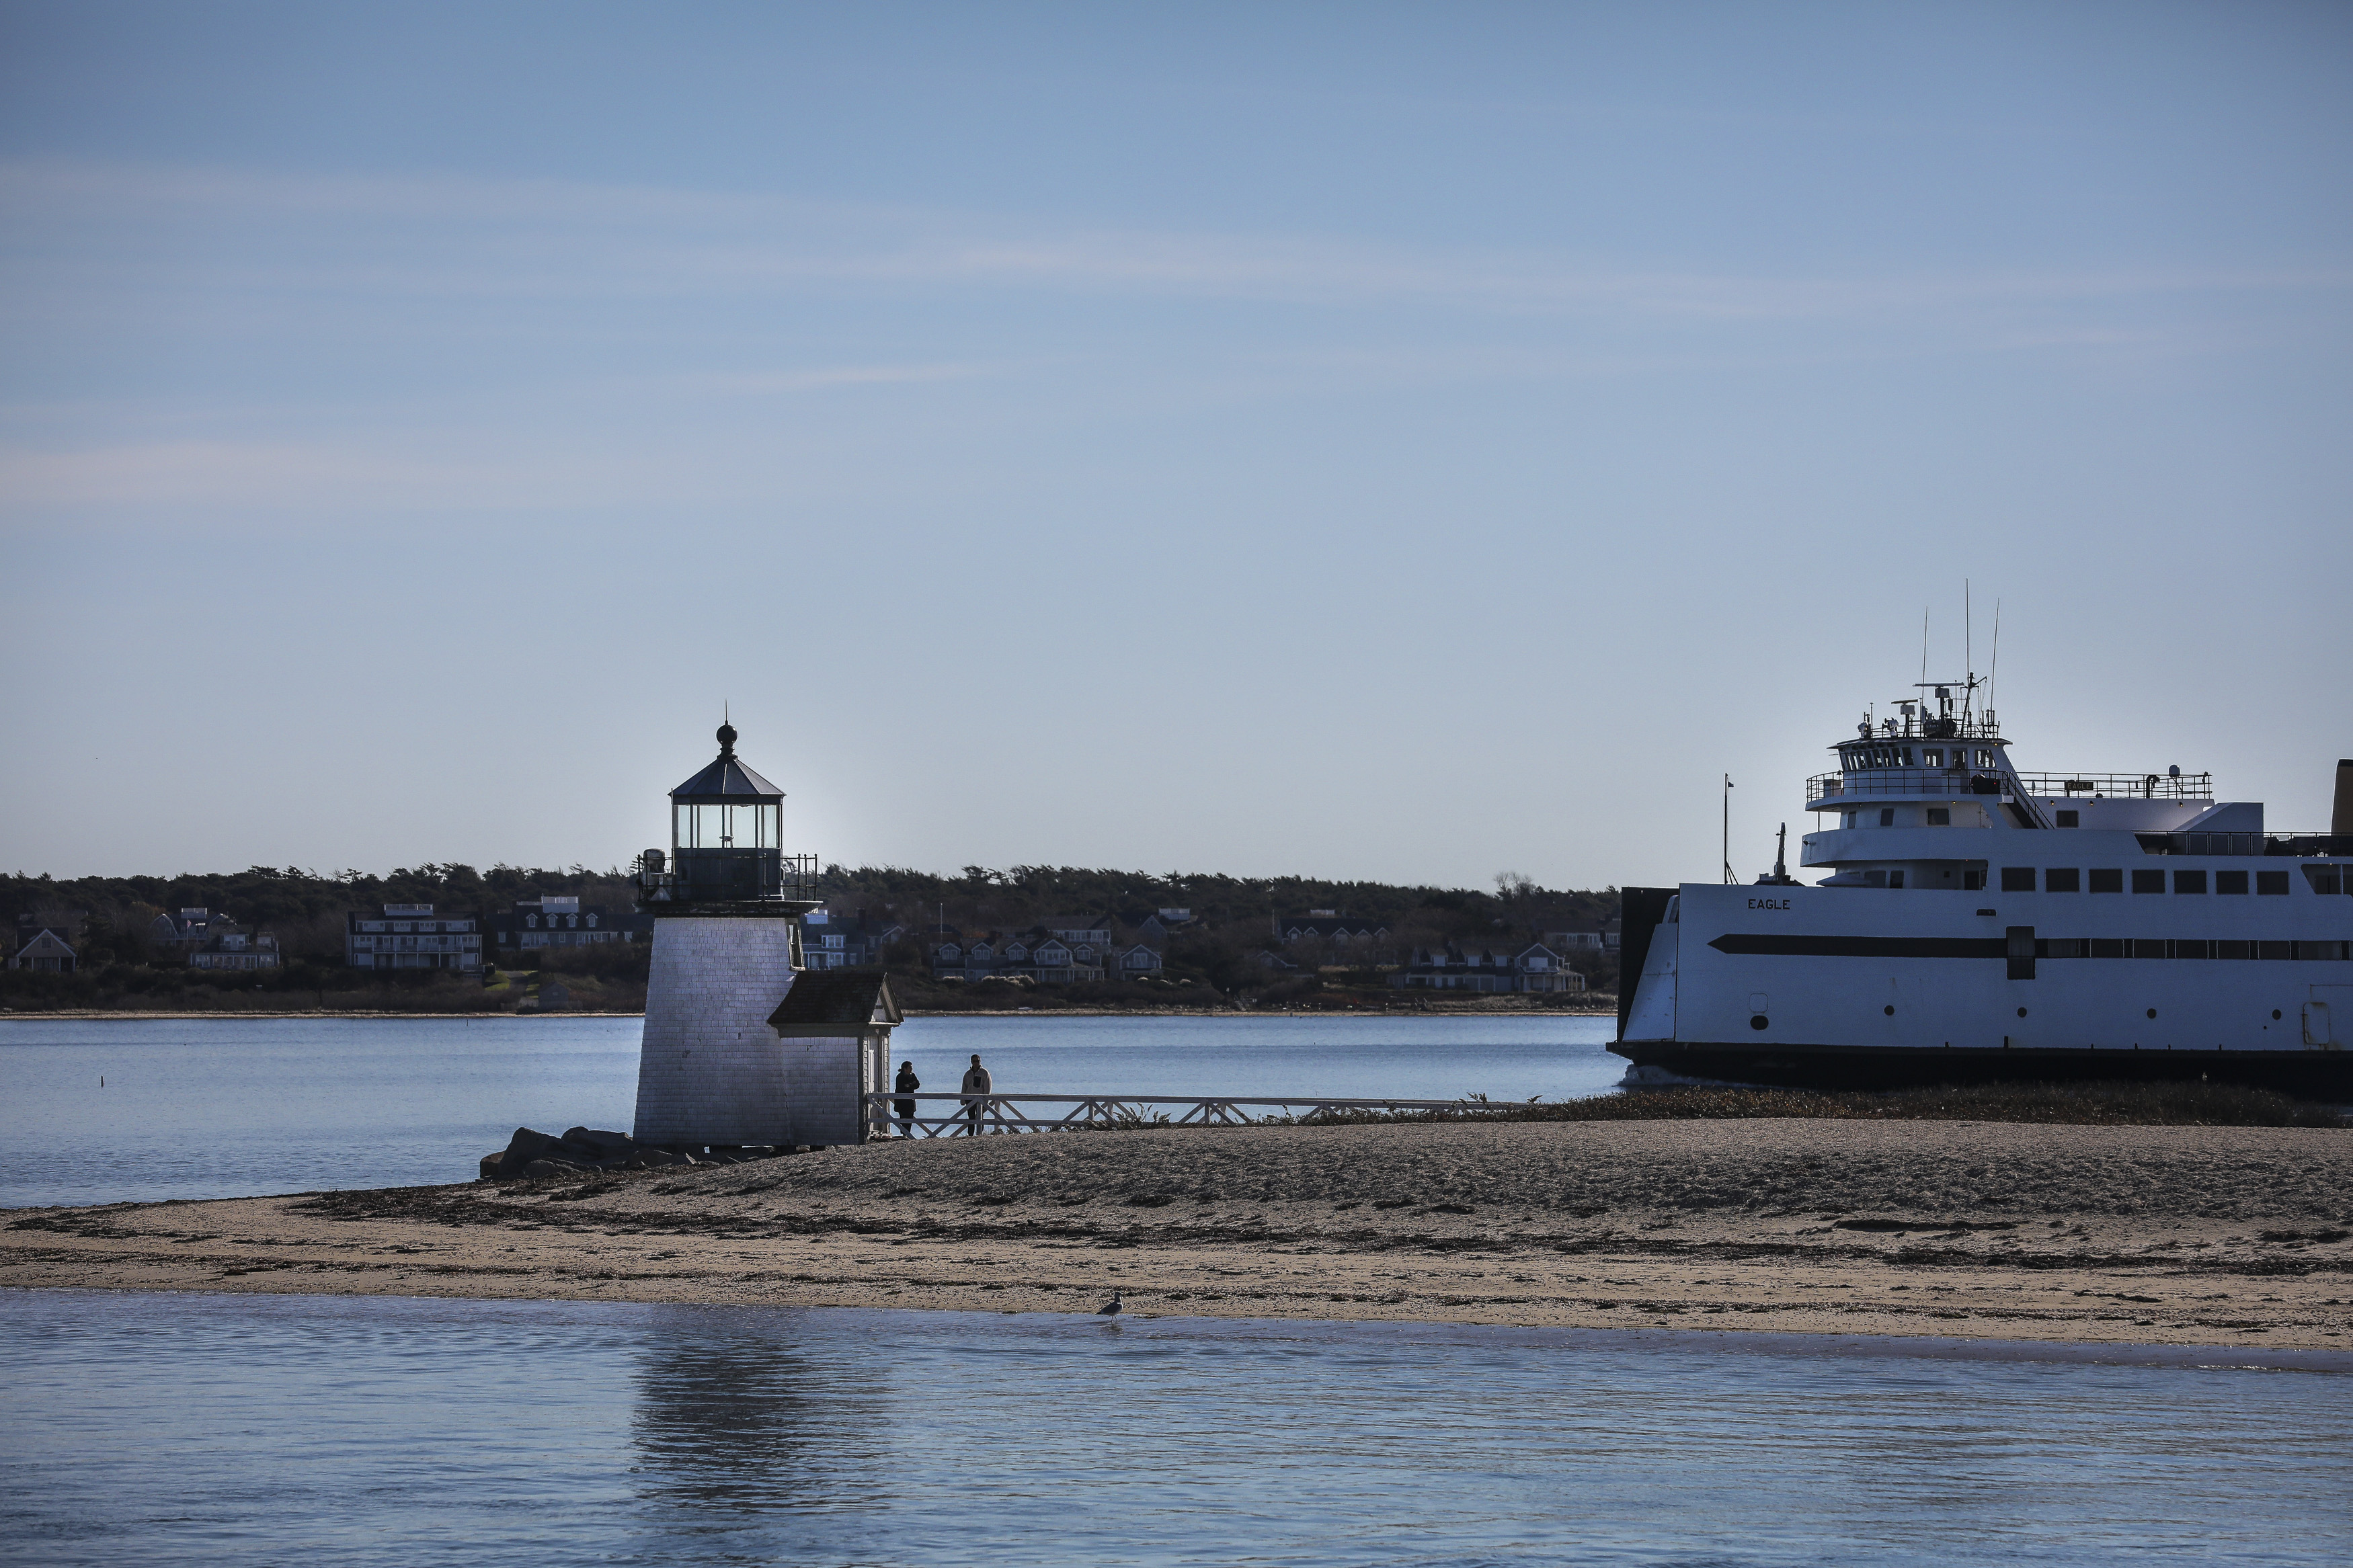 Nantucket Lightship Shines Again in East Boston